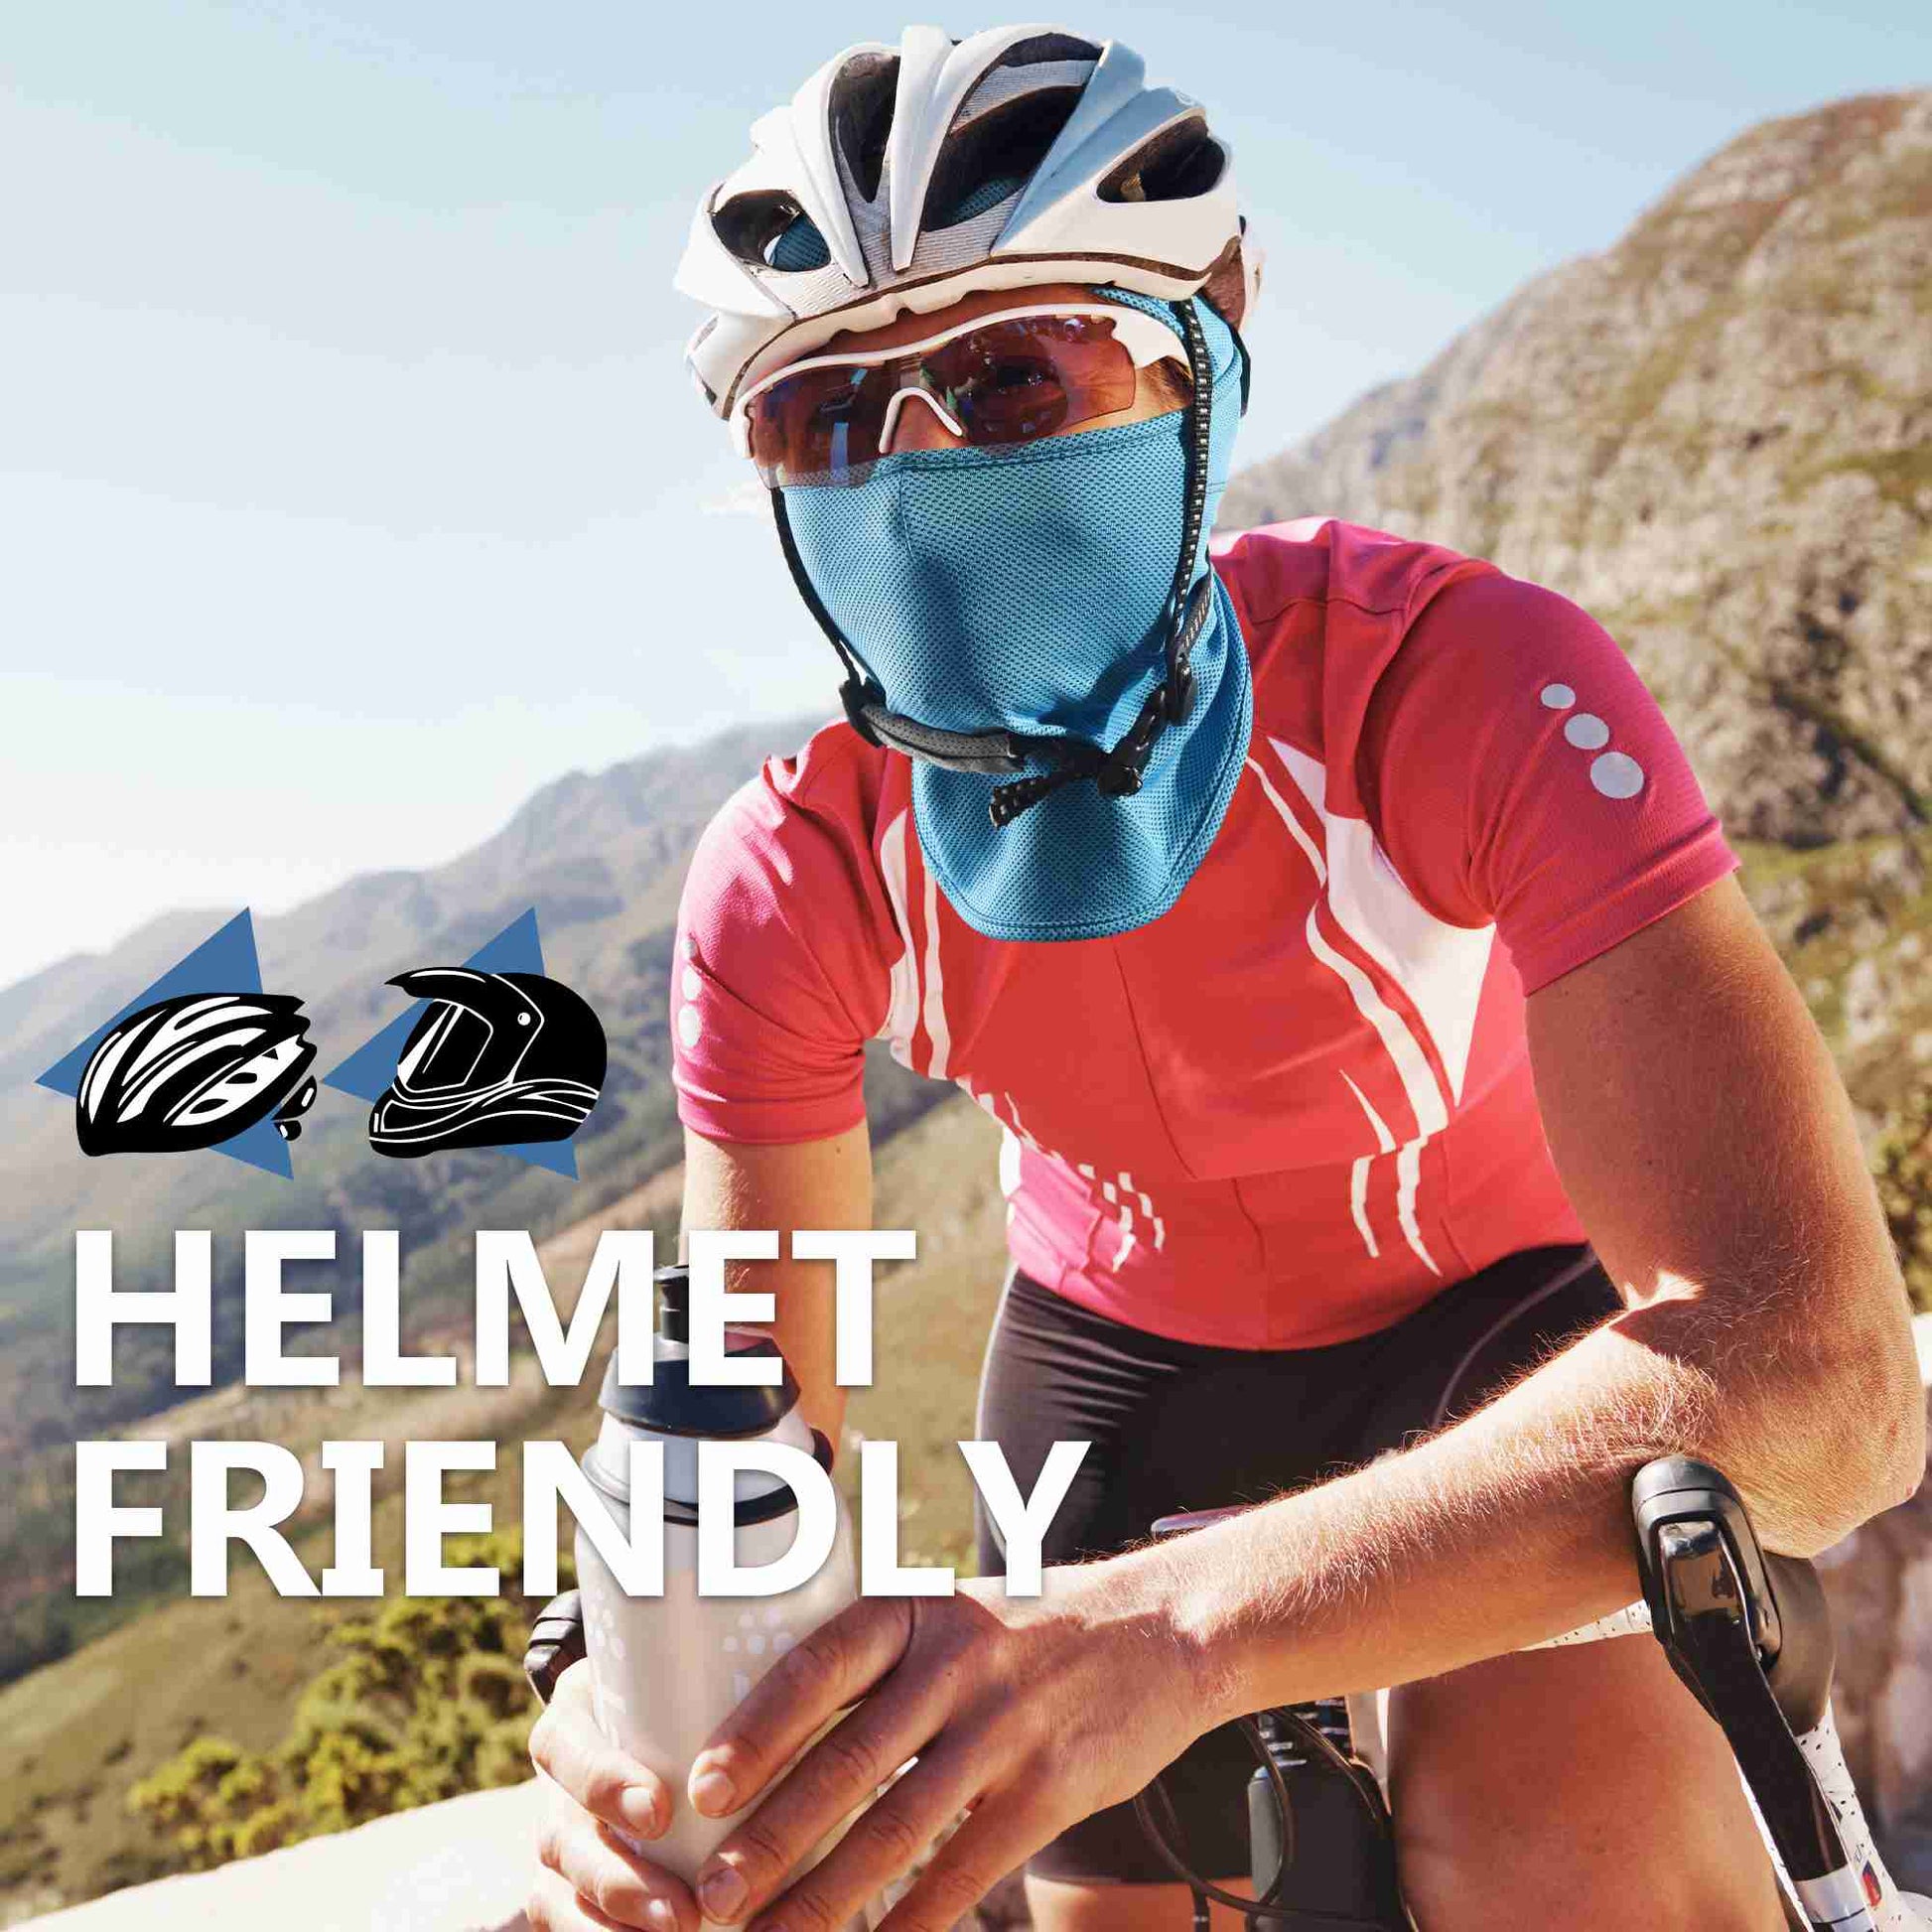 Botack Sun Protection Balaclava Mask - Full Head Cover for Cycling